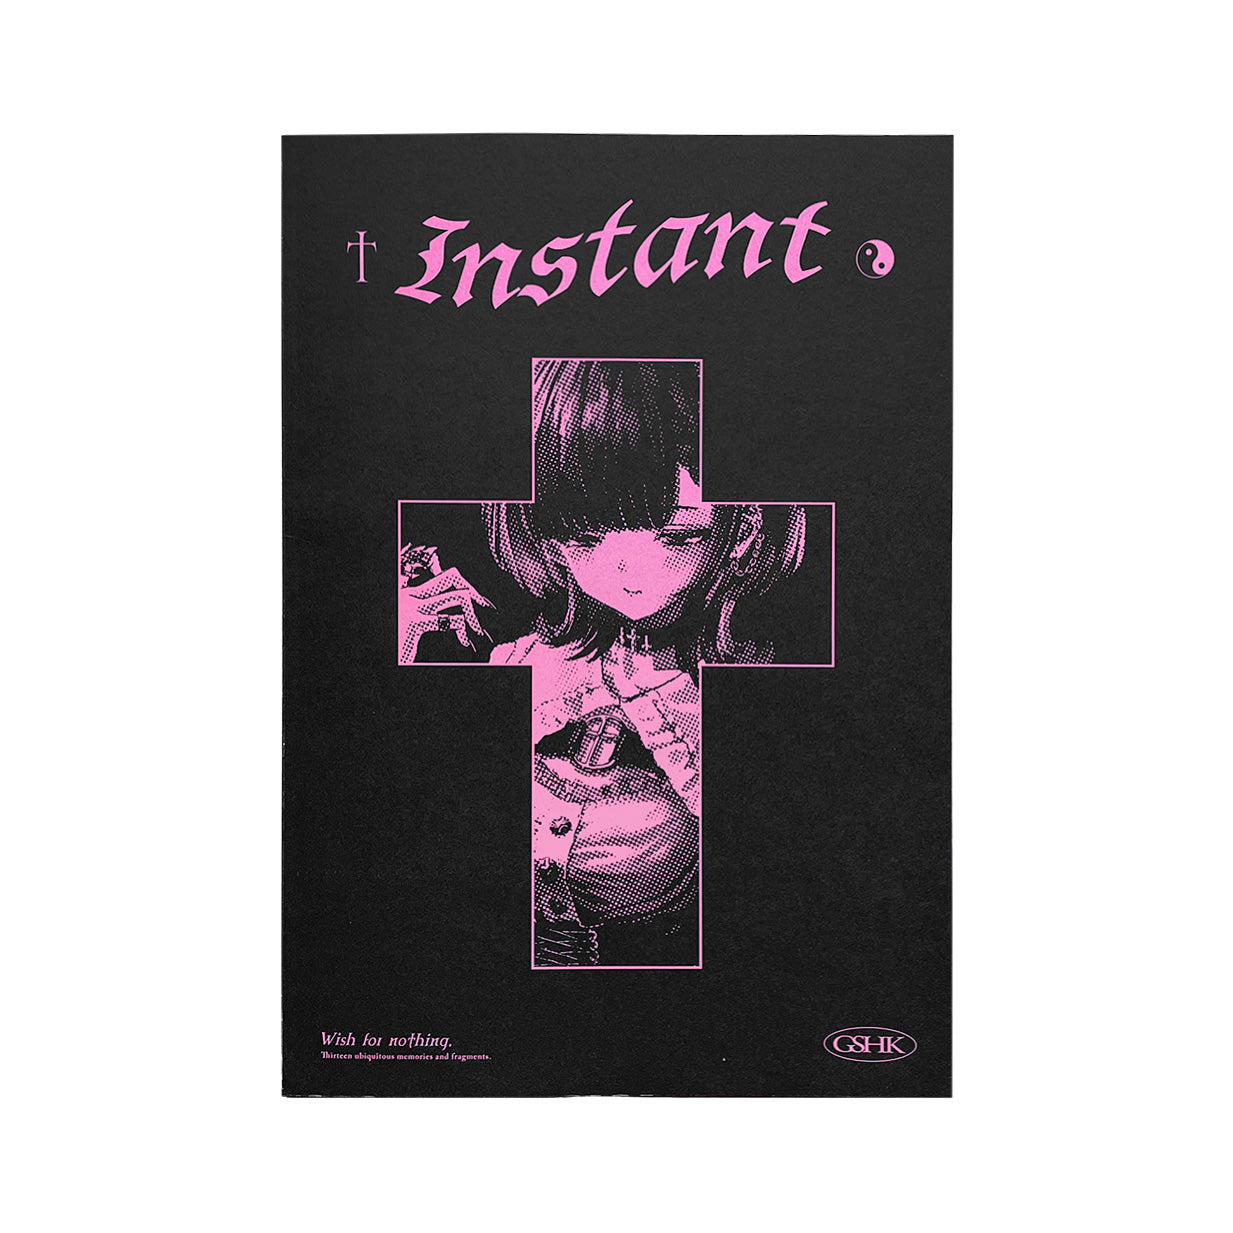 ART BOOK "INSTANT"